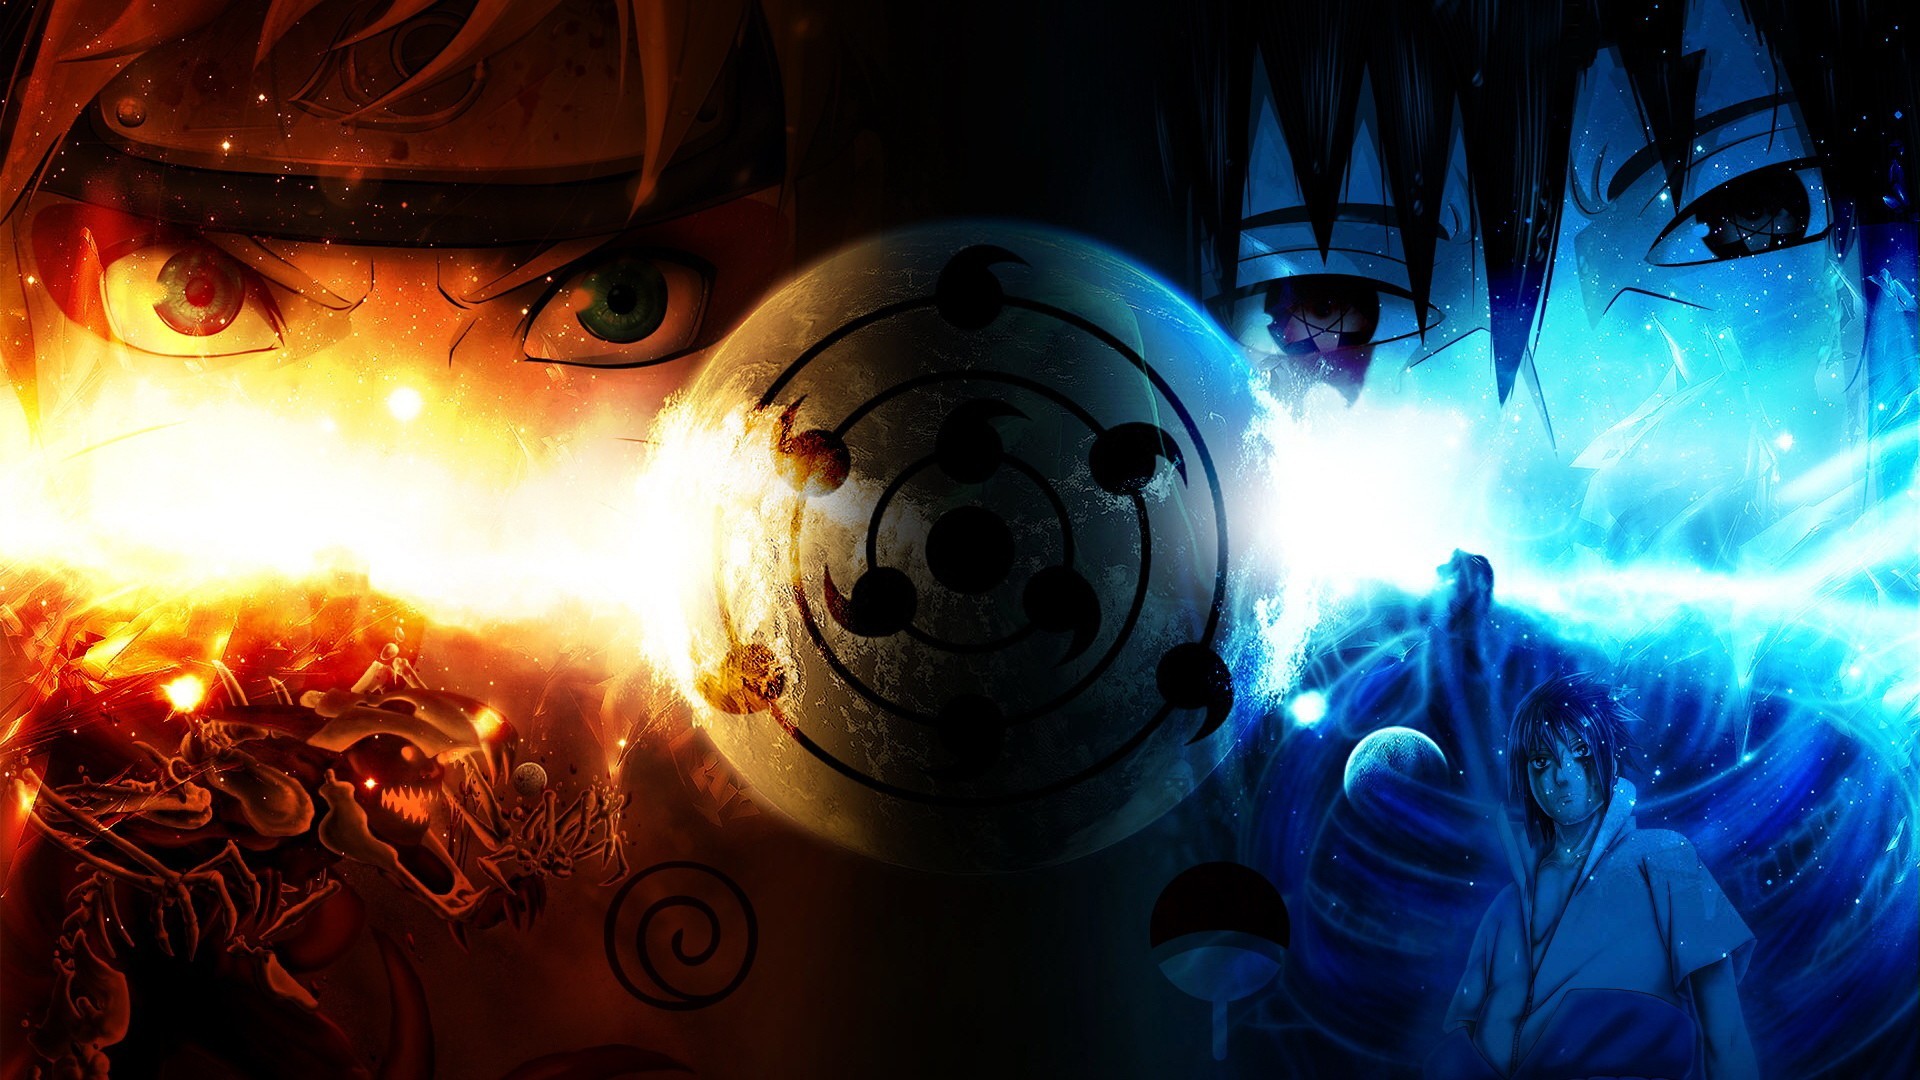 Free A26 Naruto anime Shippuden HD Desktop background wallpapers downloads